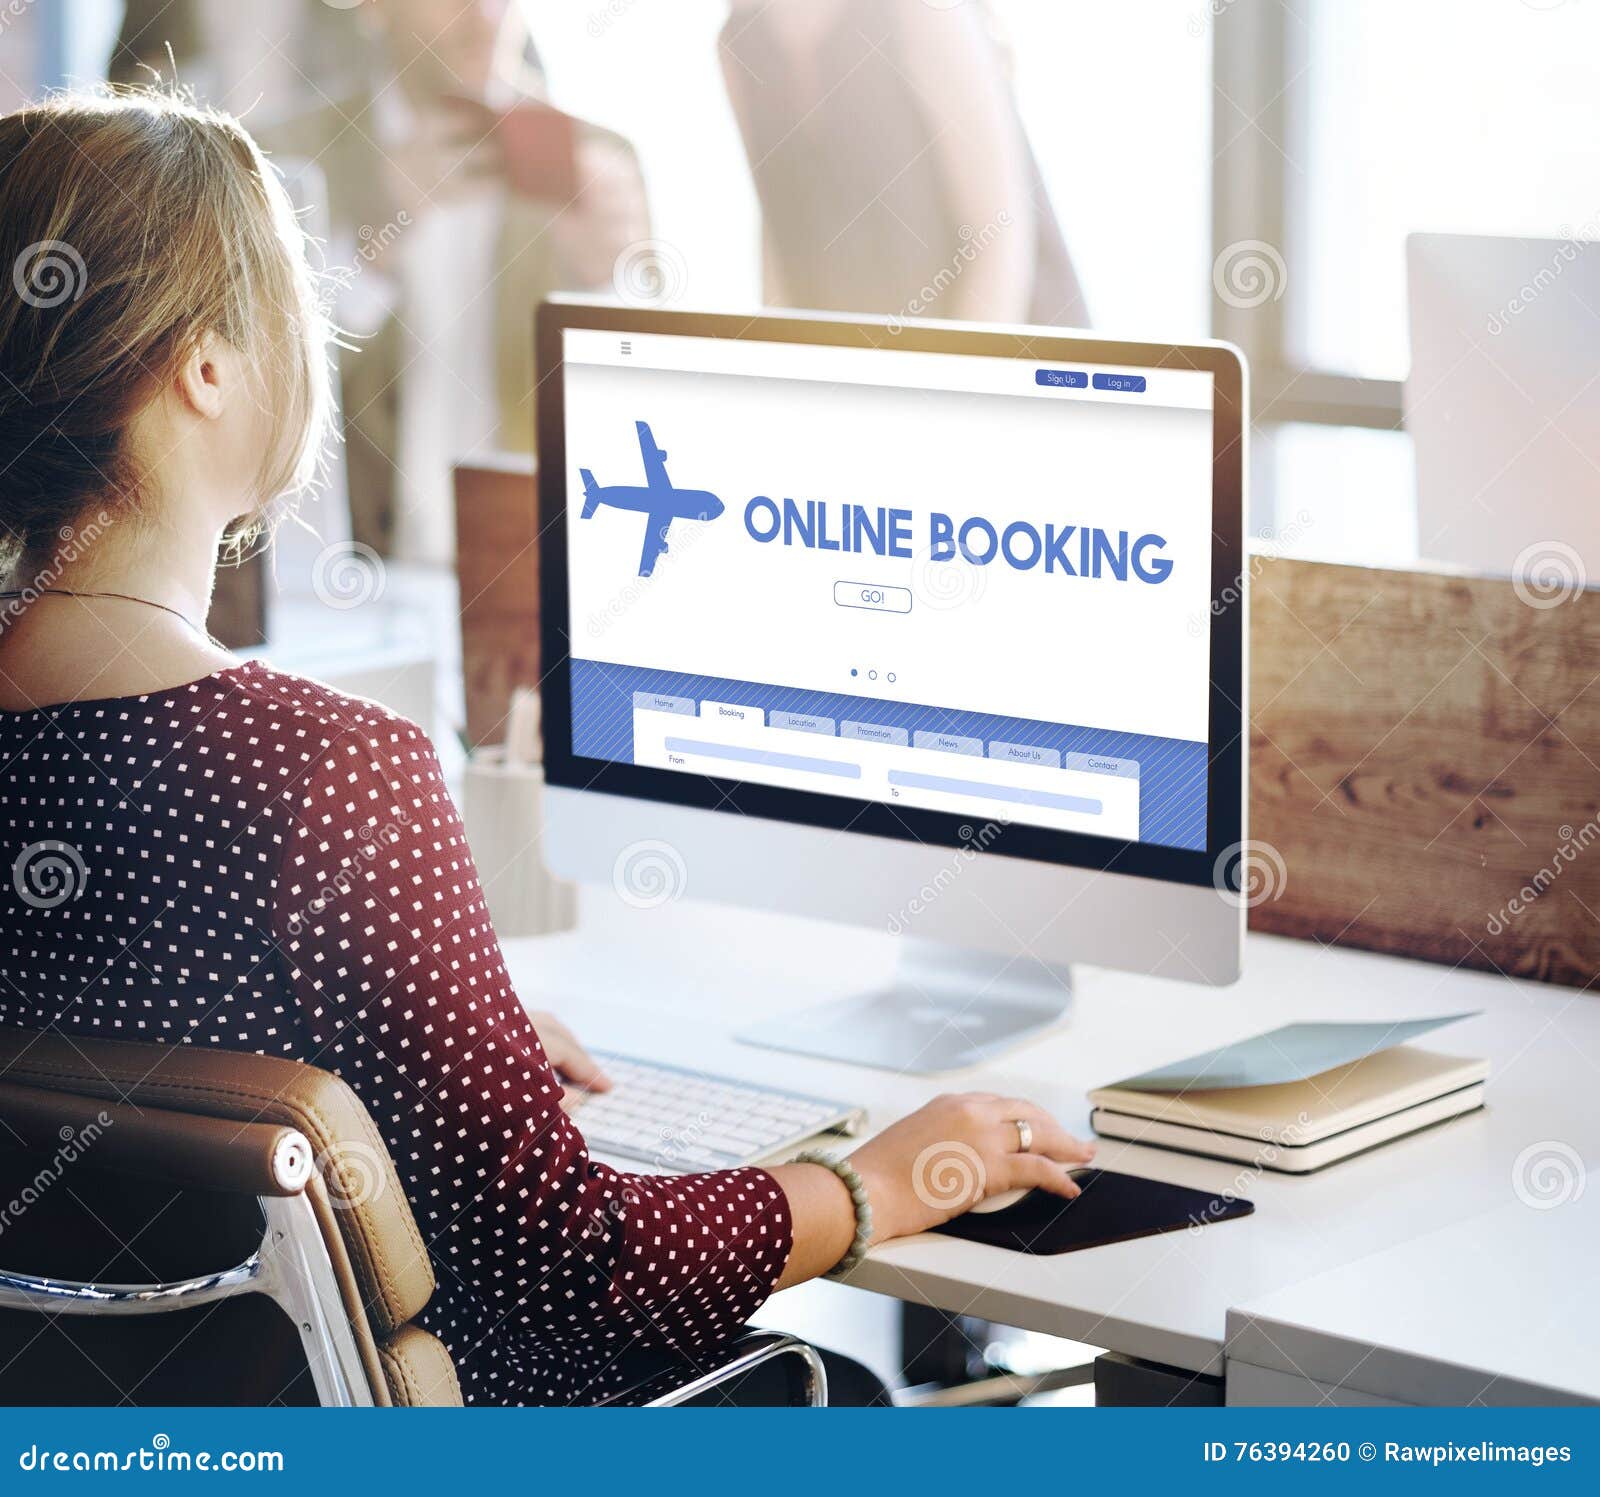 online booking traveling plane flight concept